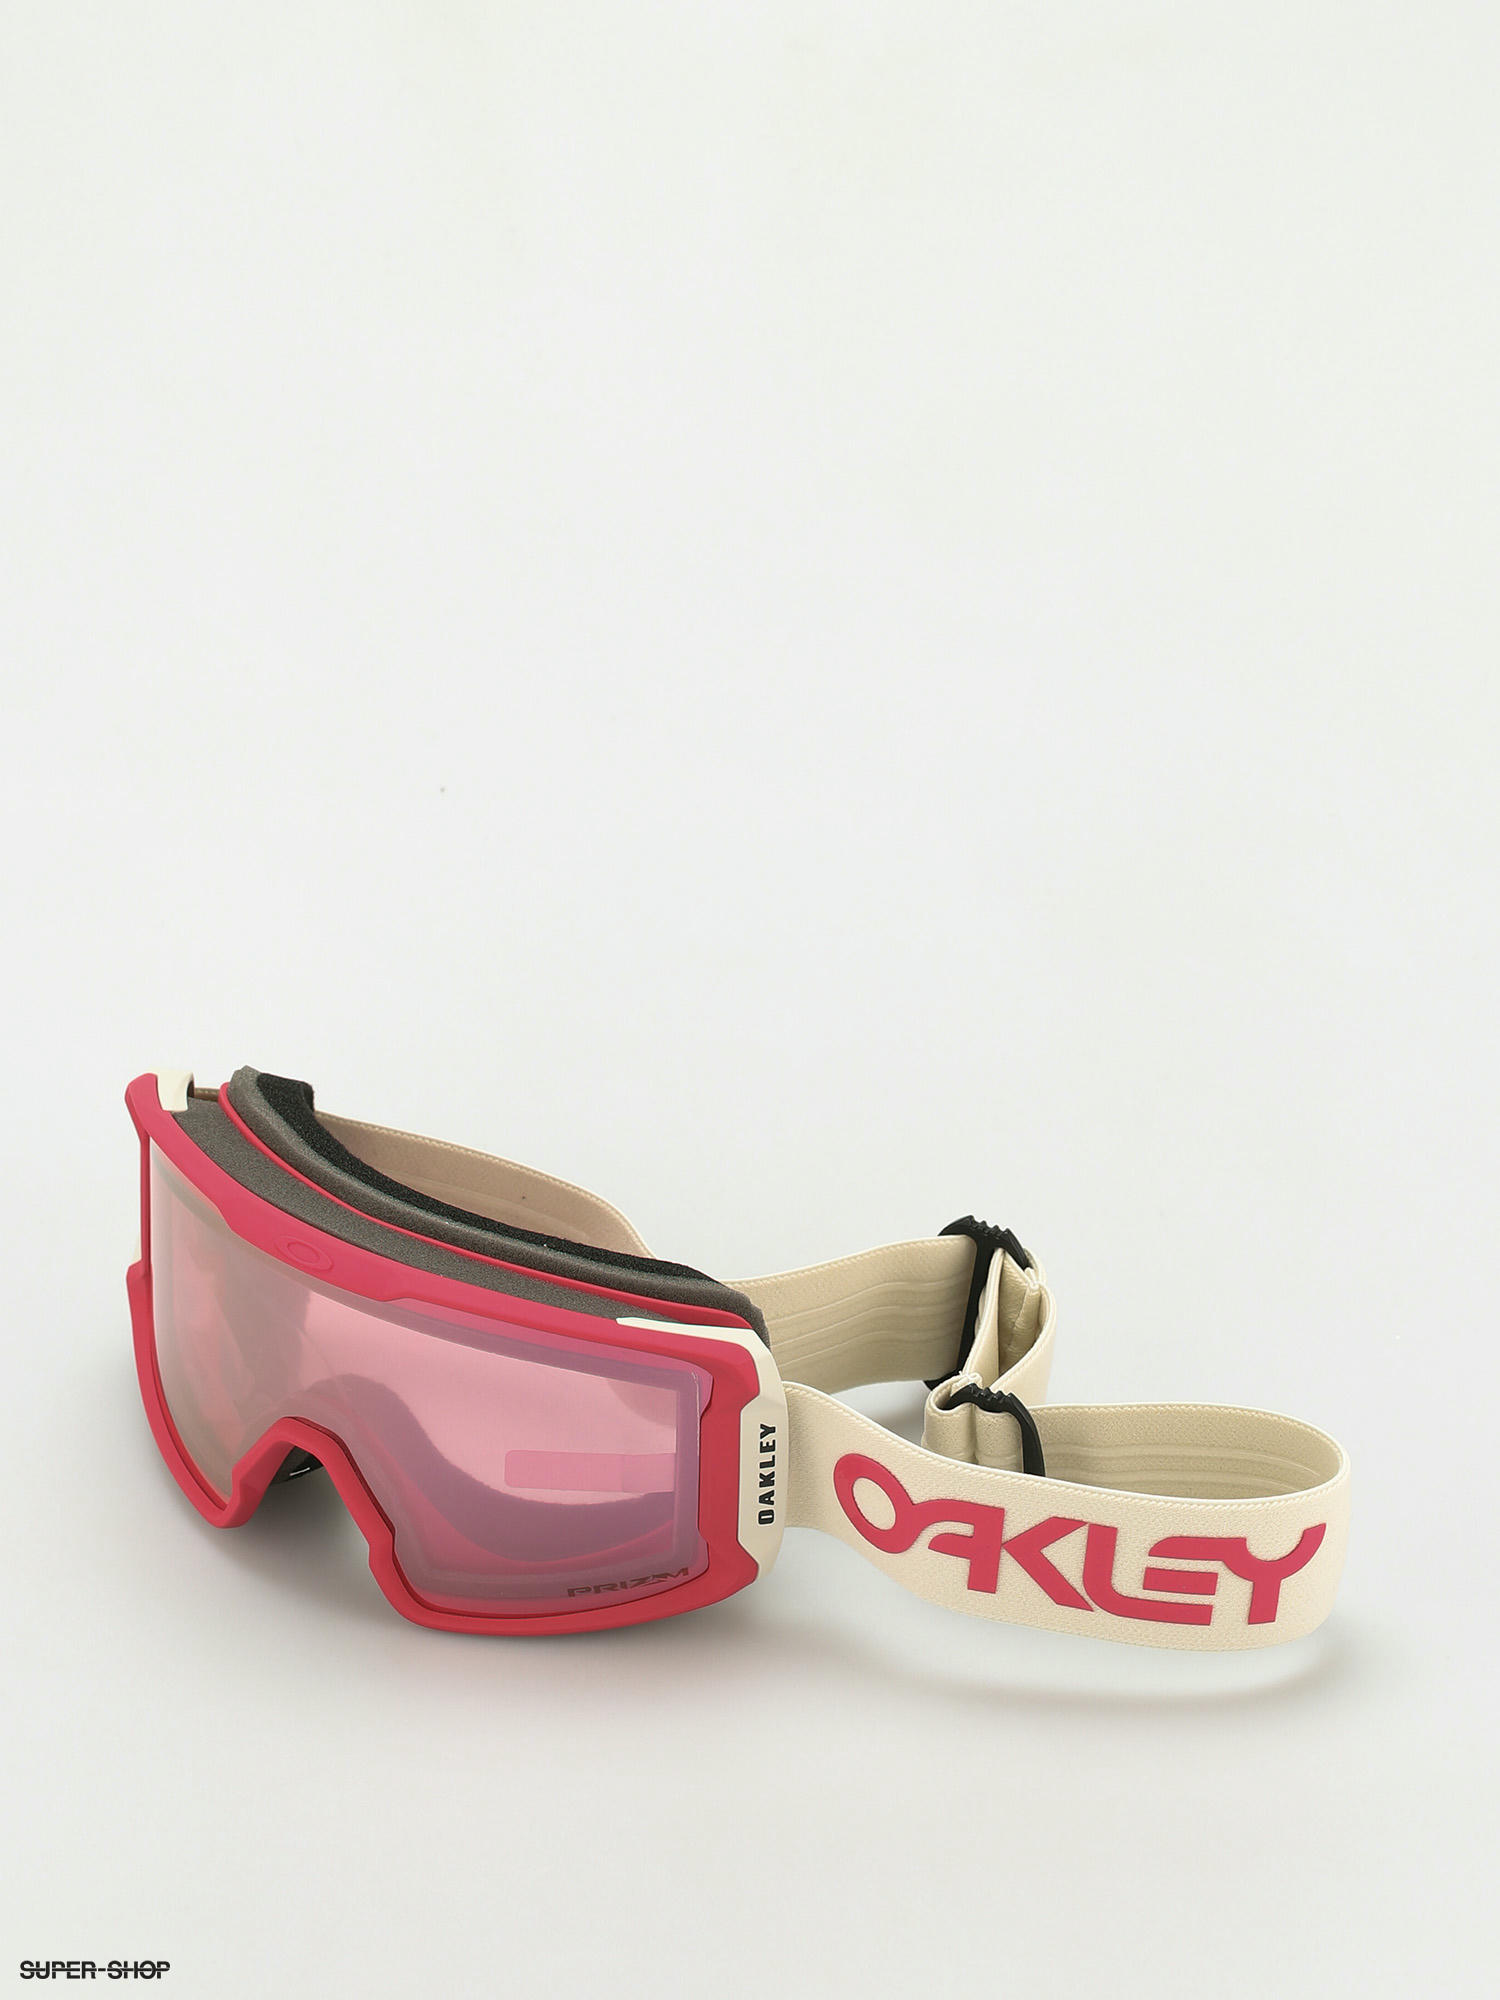 oakley factory pilot sunglasses